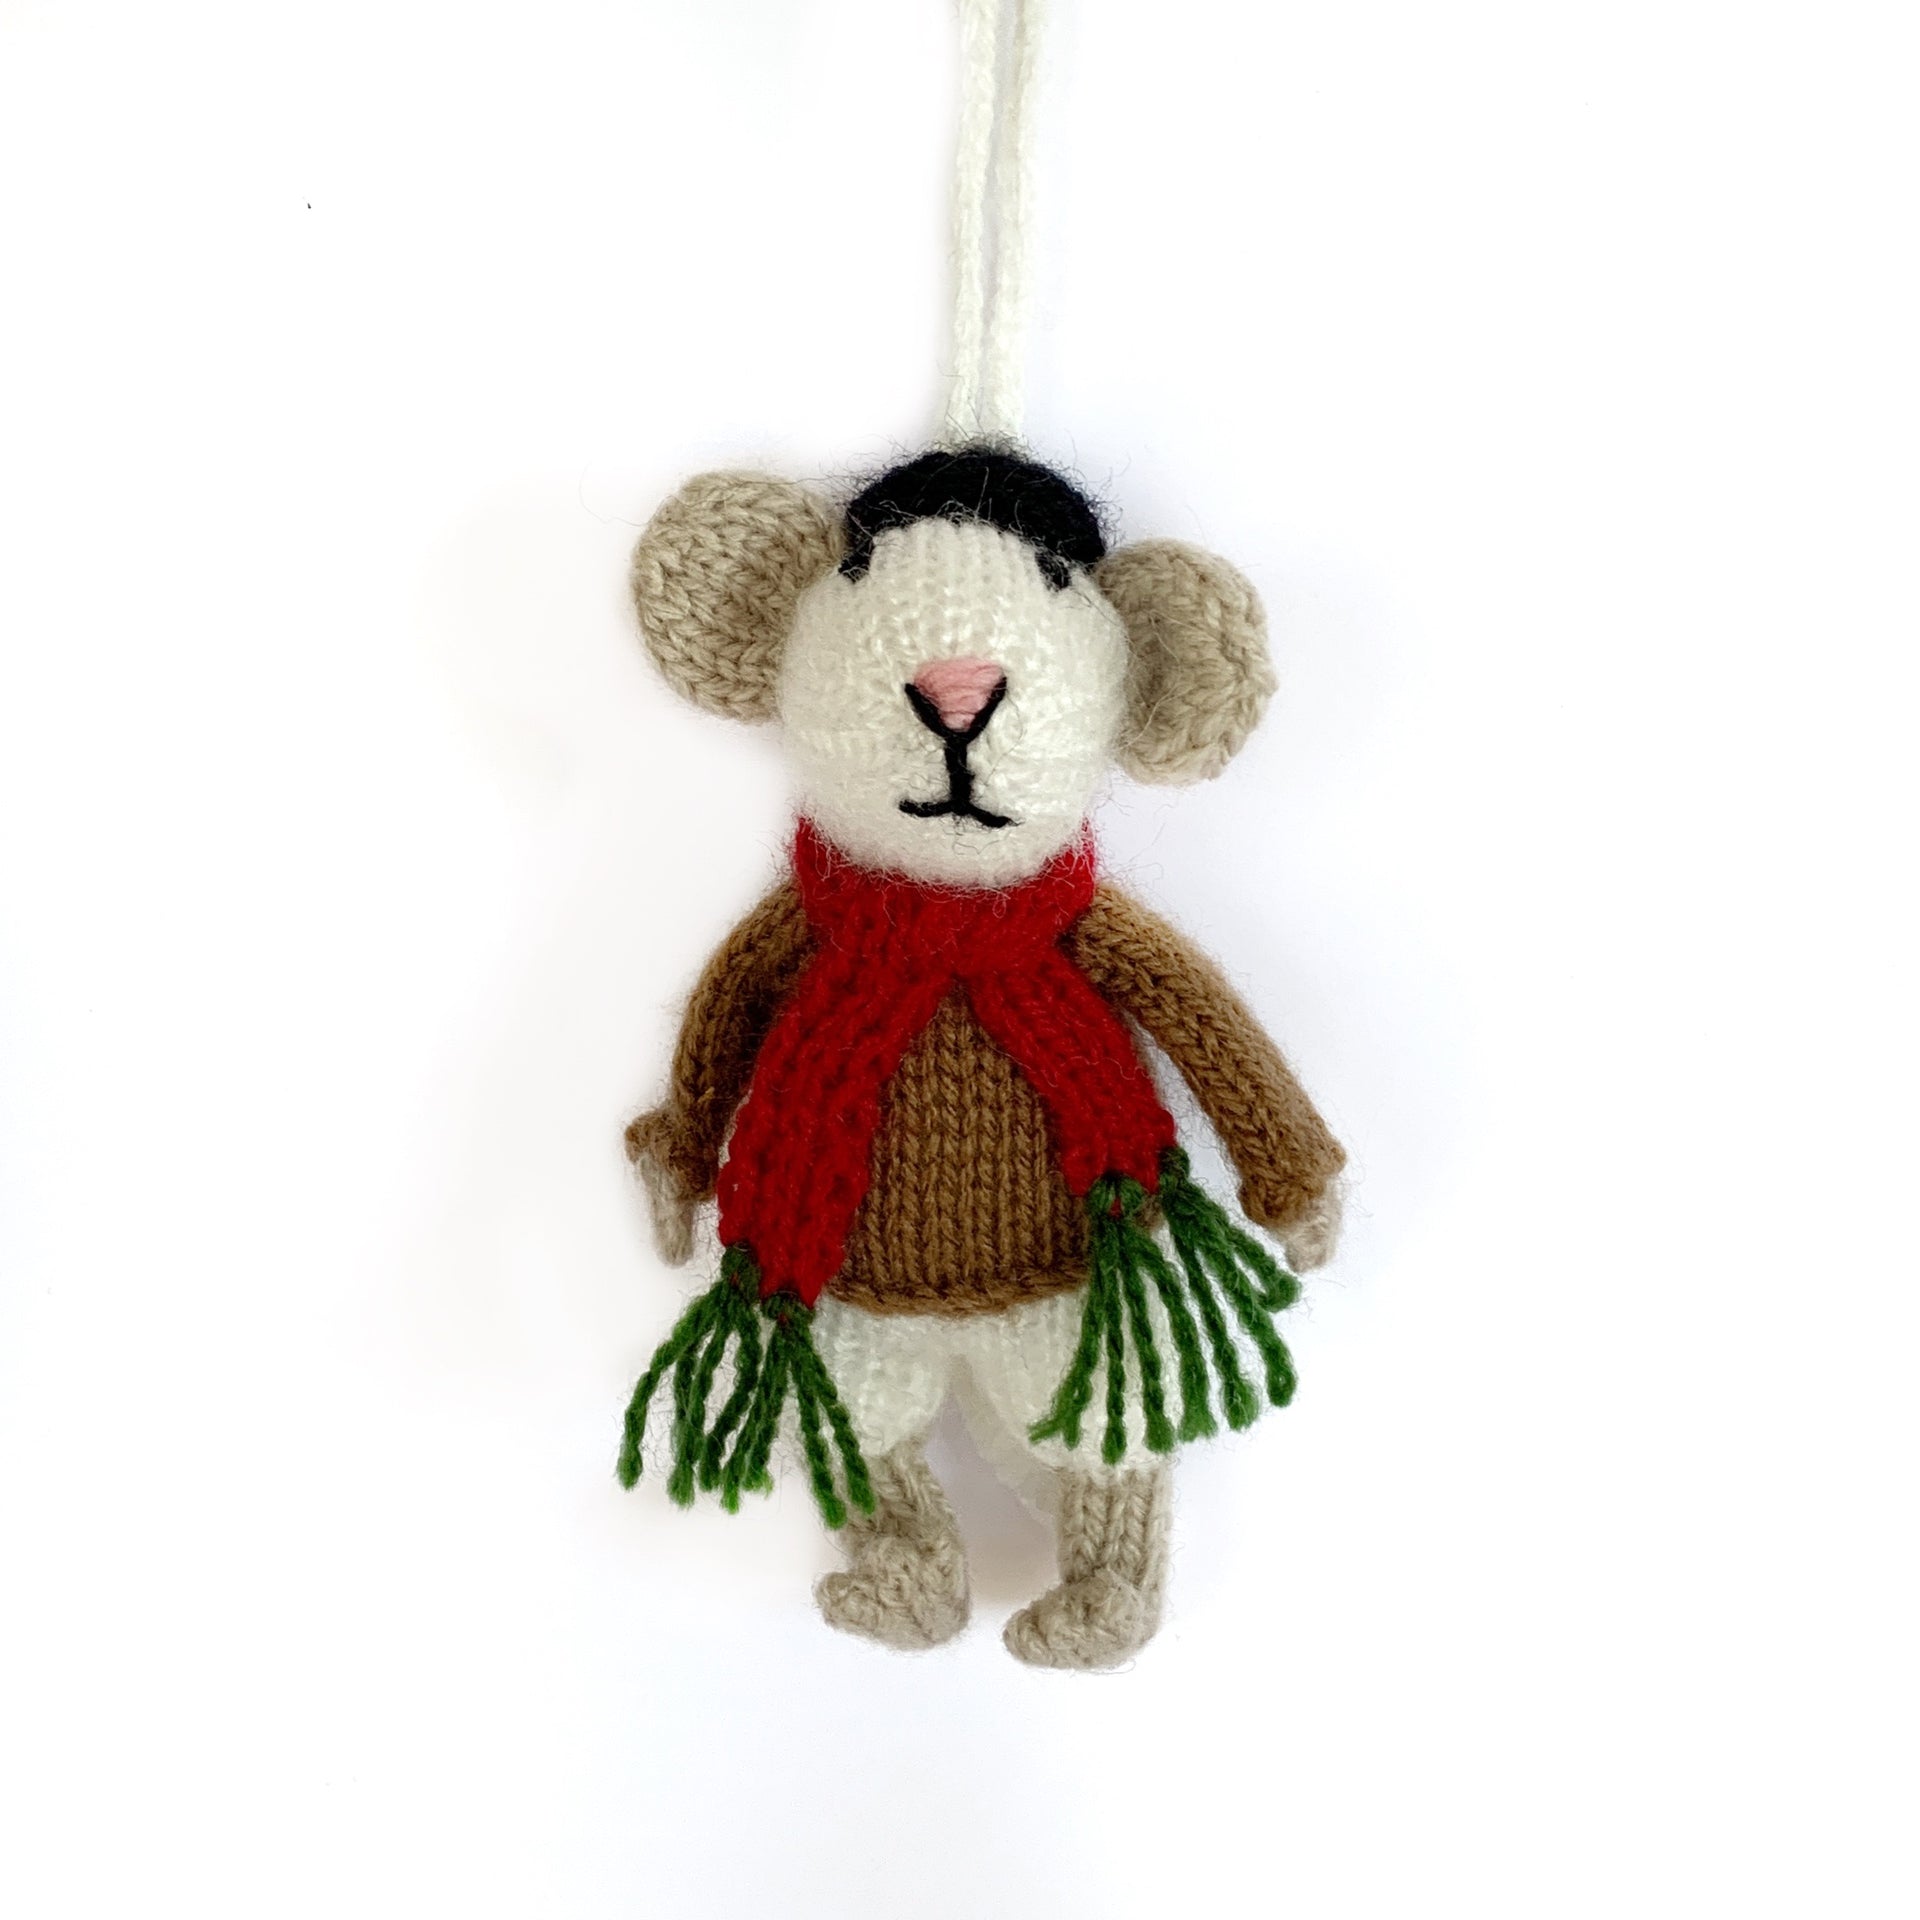 Mr. Mouse Christmas Ornament Knit Handmade